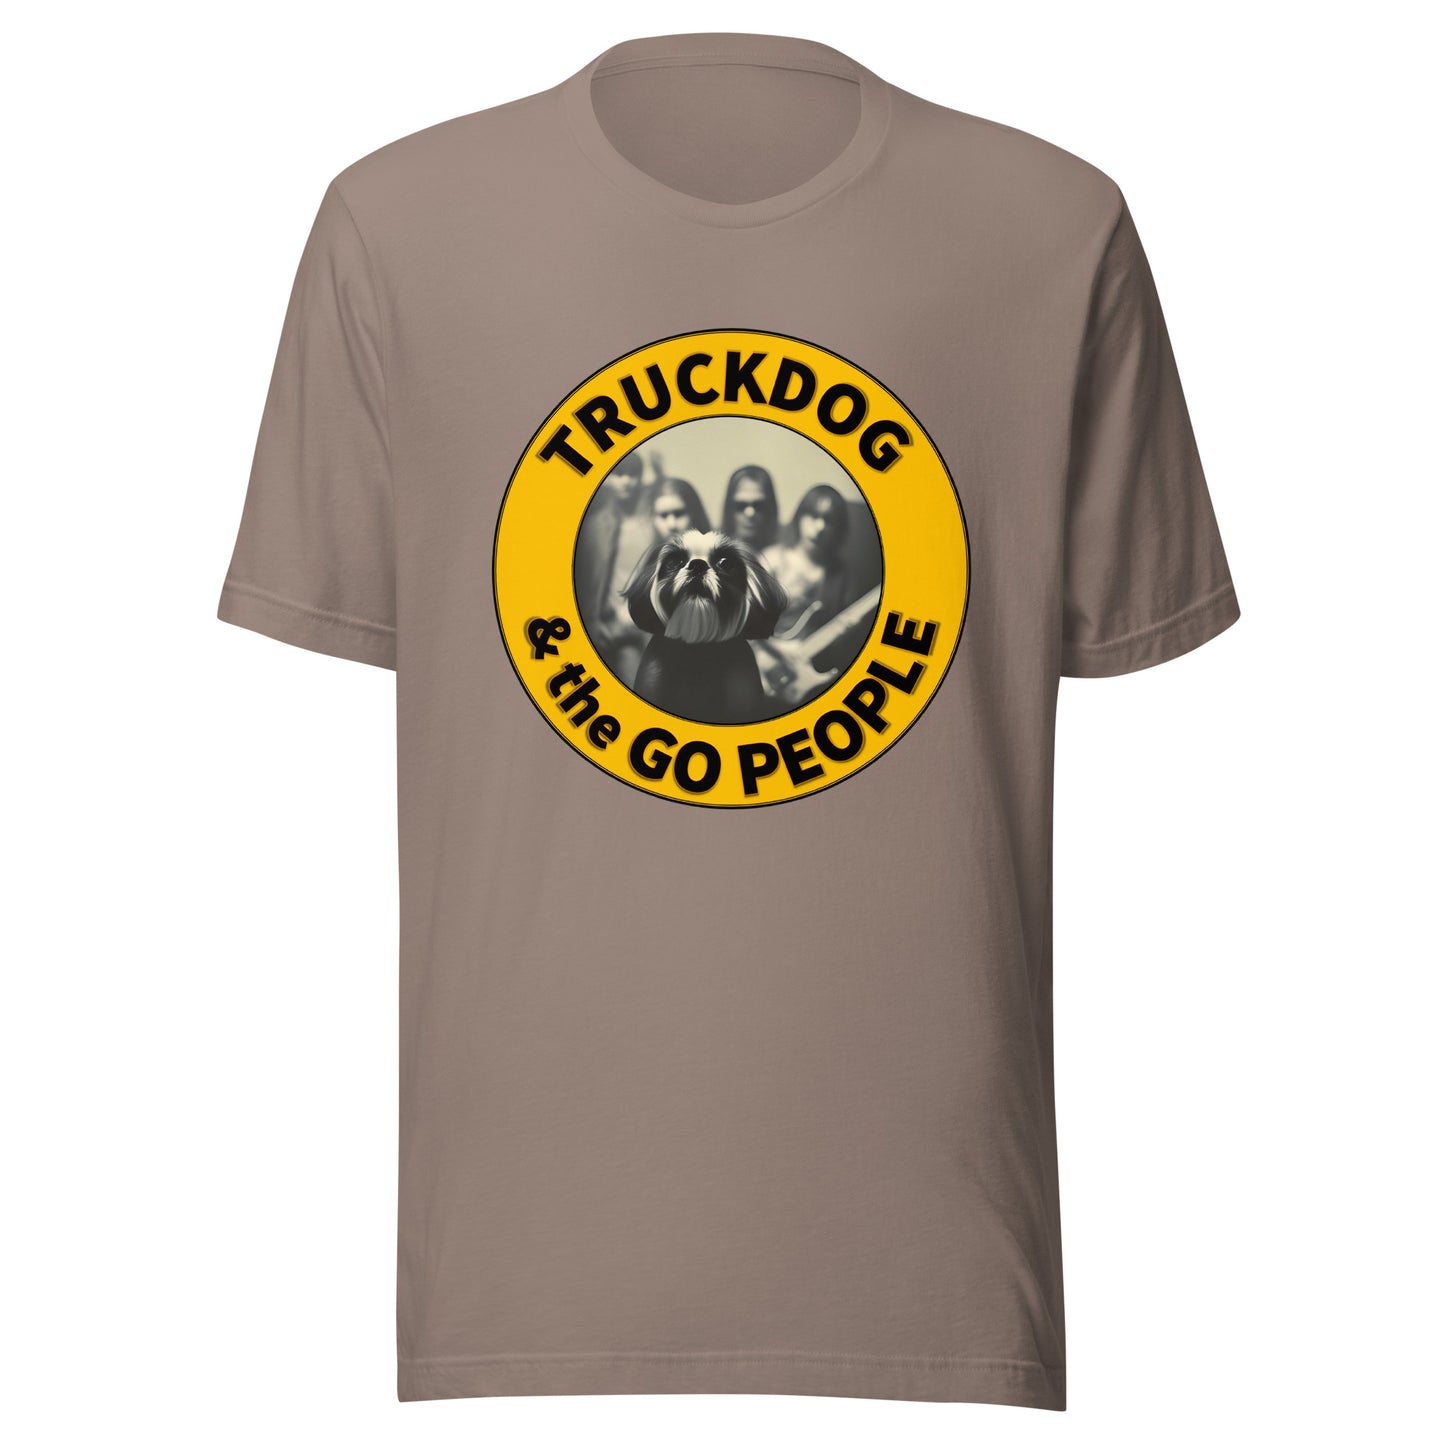 TruckDog & The Go People Classic Dog Logo T-Shirt